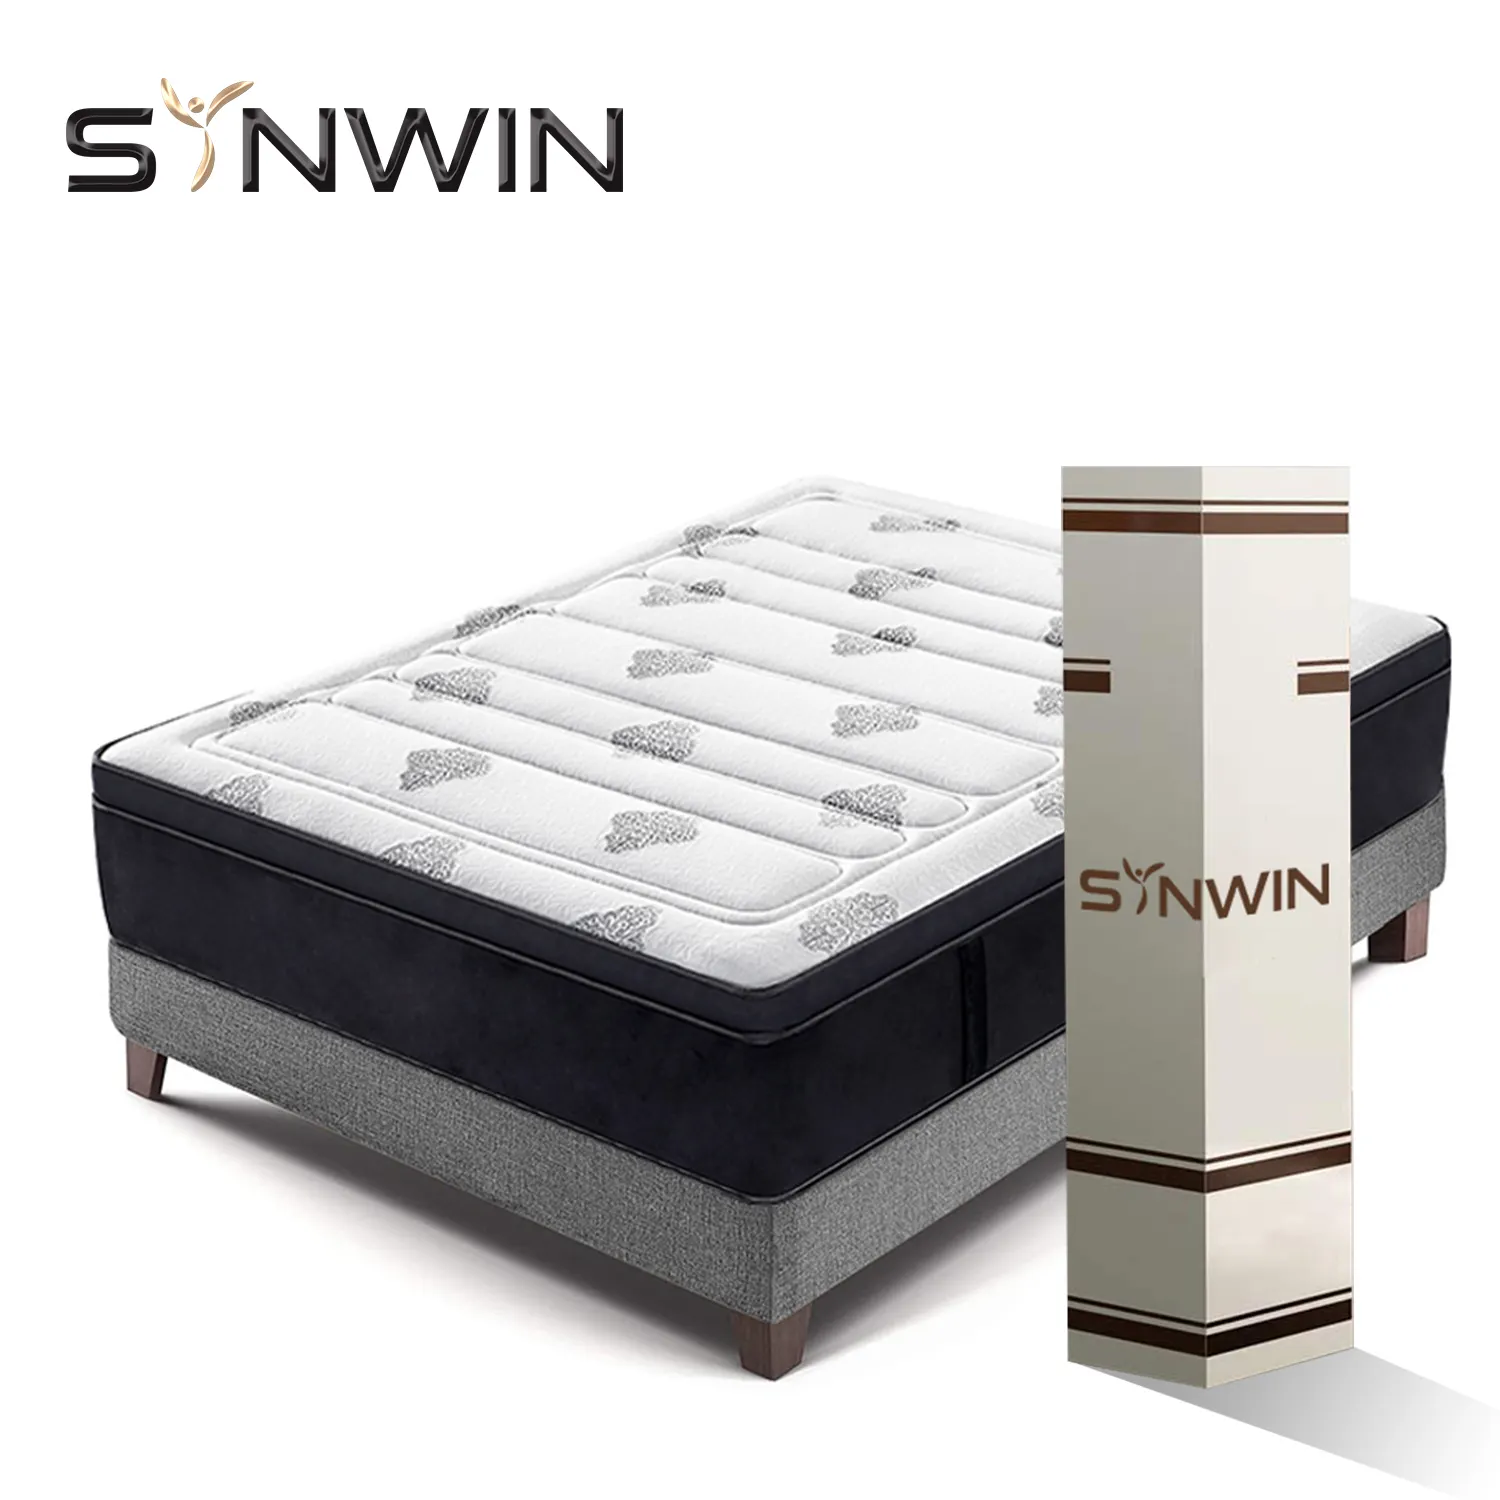 36cm foam encase back pain protector single bed mattress price